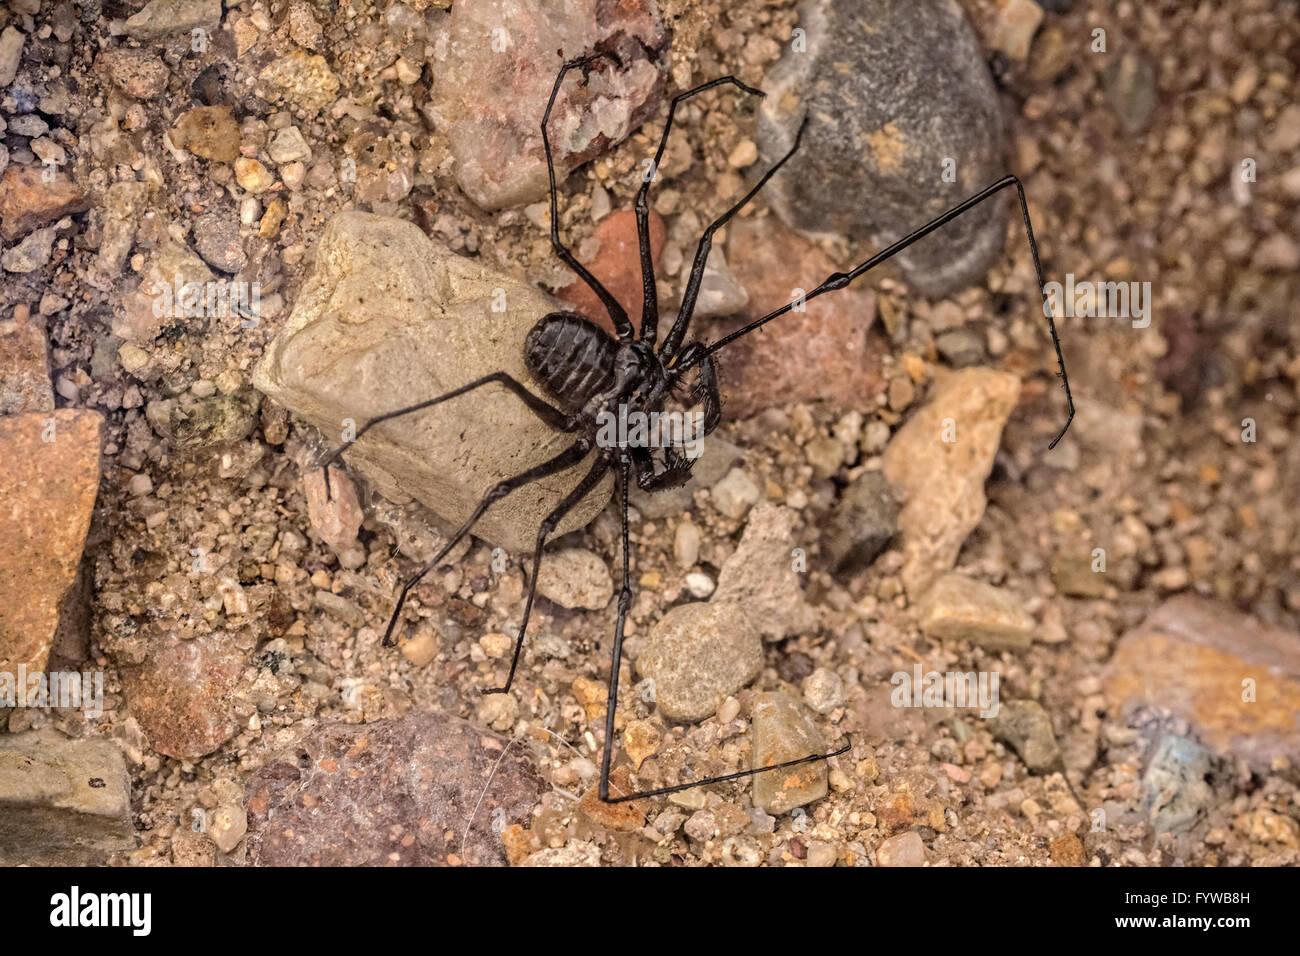 Amblypygi es una orden de araña chelicerate artrópodos látigo o látigo tailless arañas o escorpiones. Foto de stock